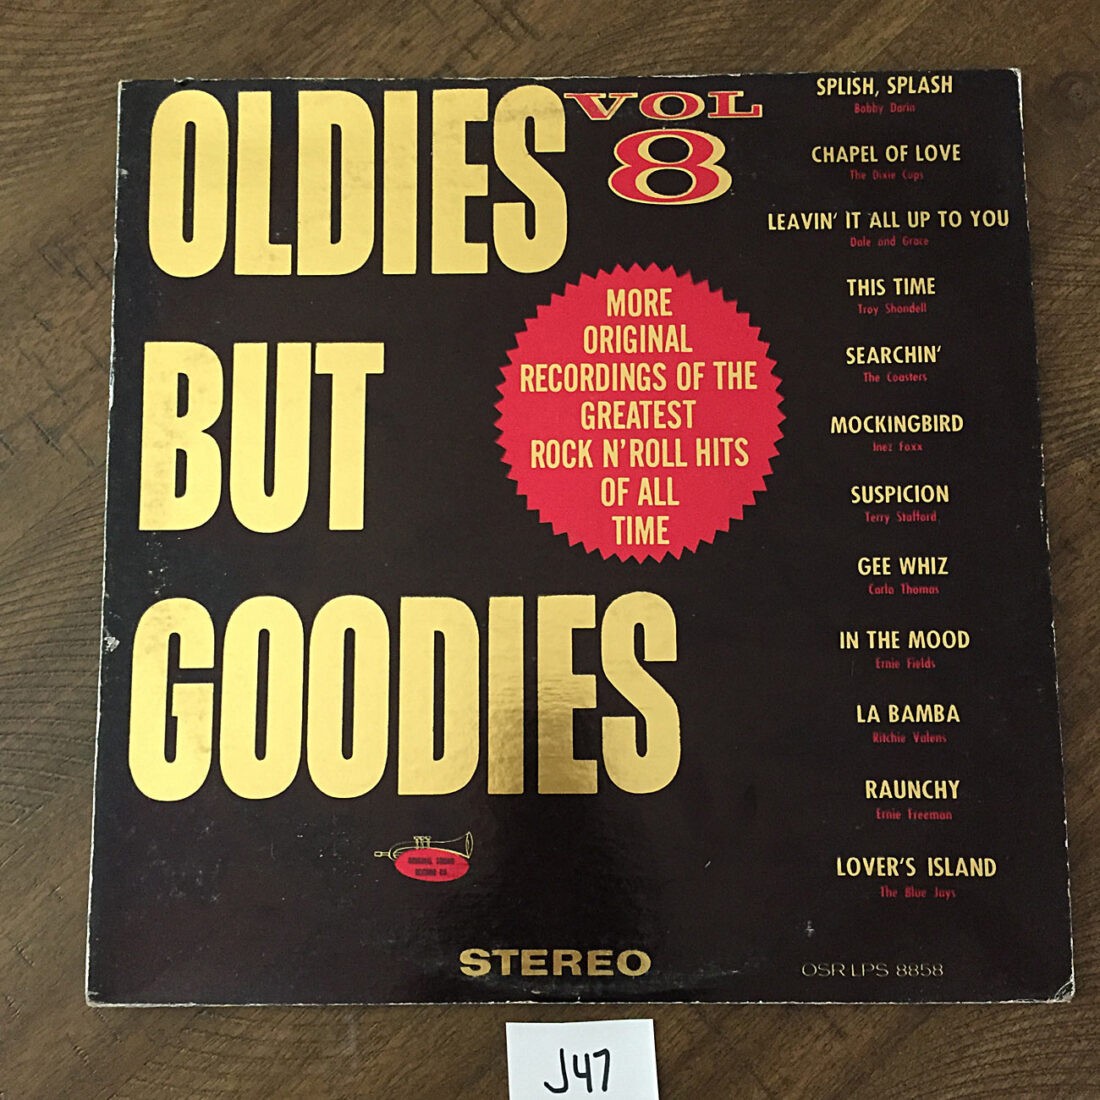 Oldies But Goodies Volume 8 Original Vinyl Edition OSRLPS8858 [J47]